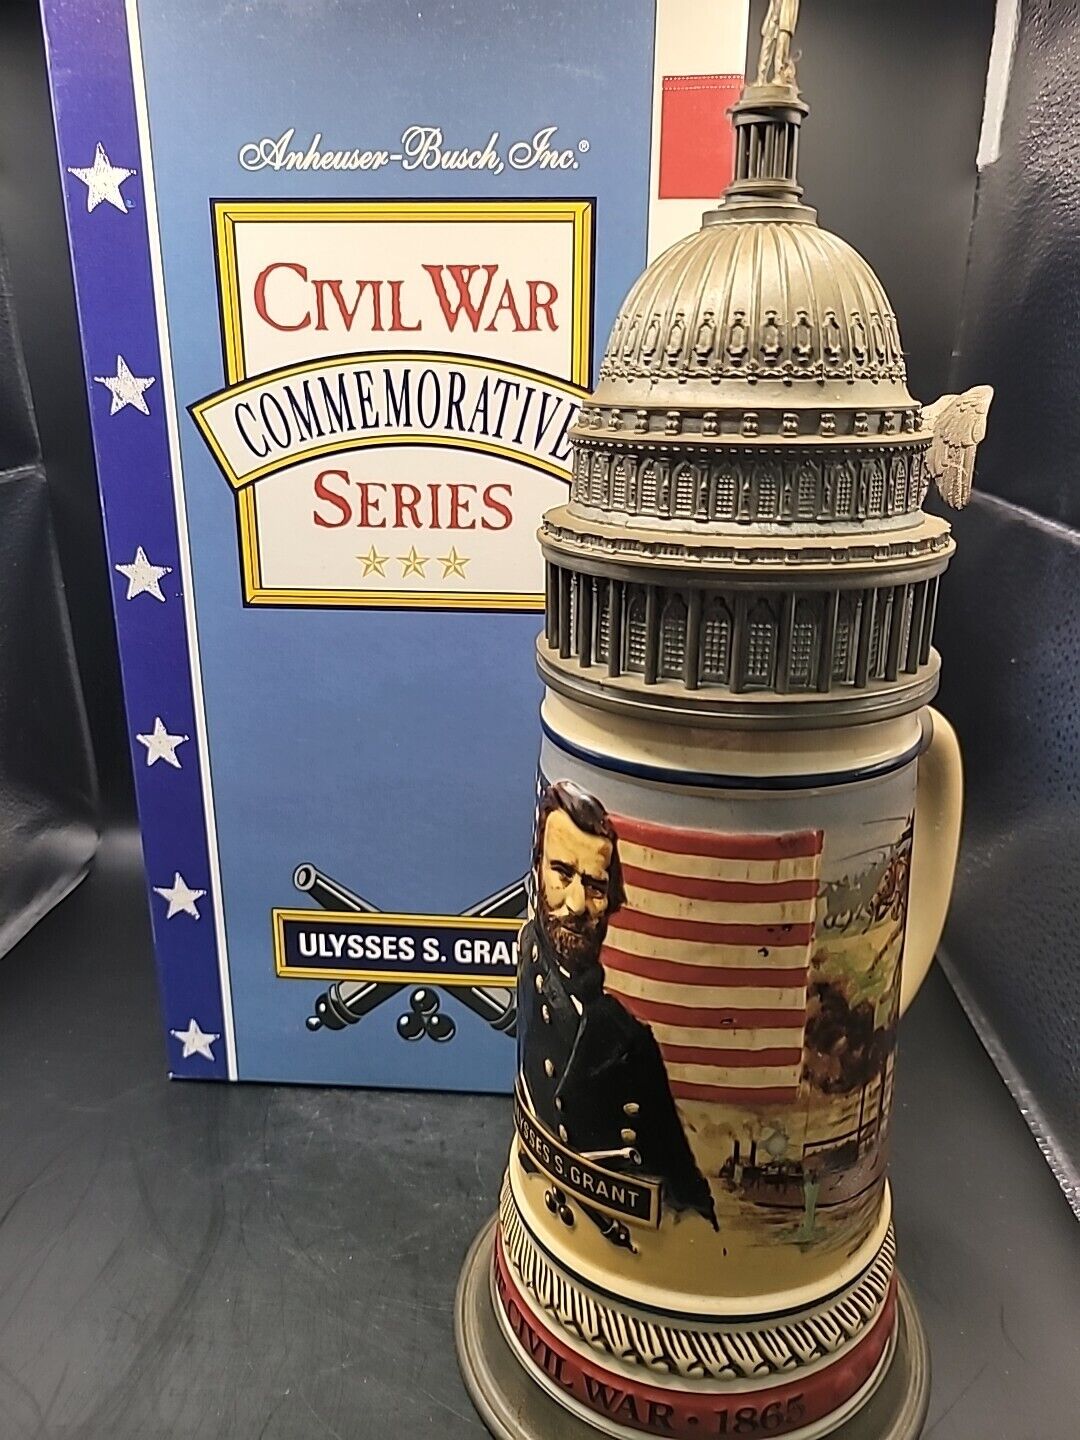 Anheuser Busch Civil War Commemorative Series 1992 Ulysses S. Grant Stein CS181